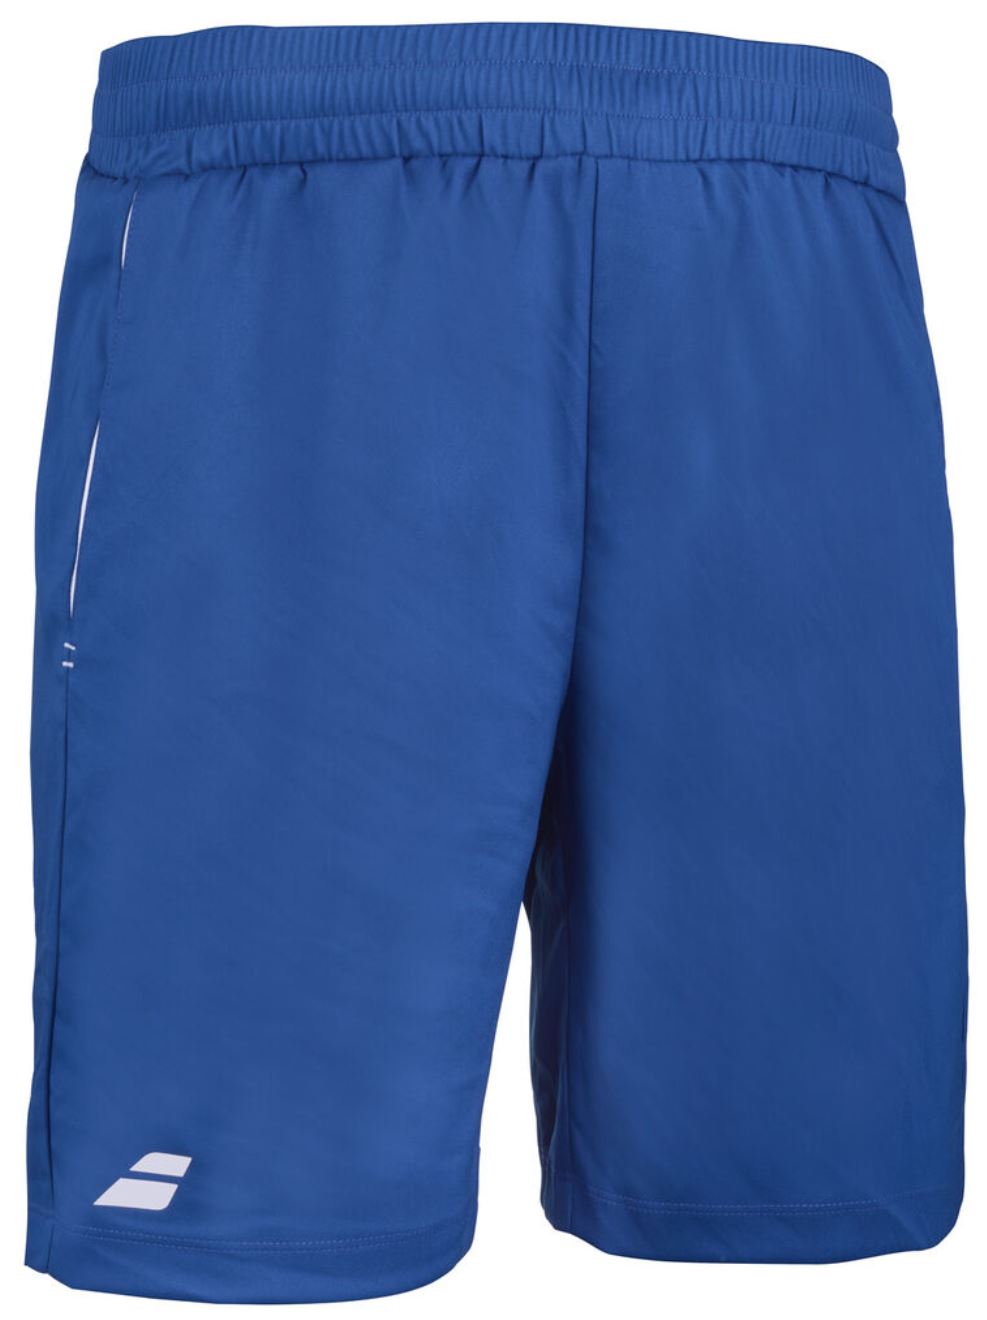 Babolat Play Shorts (Men, Blue)